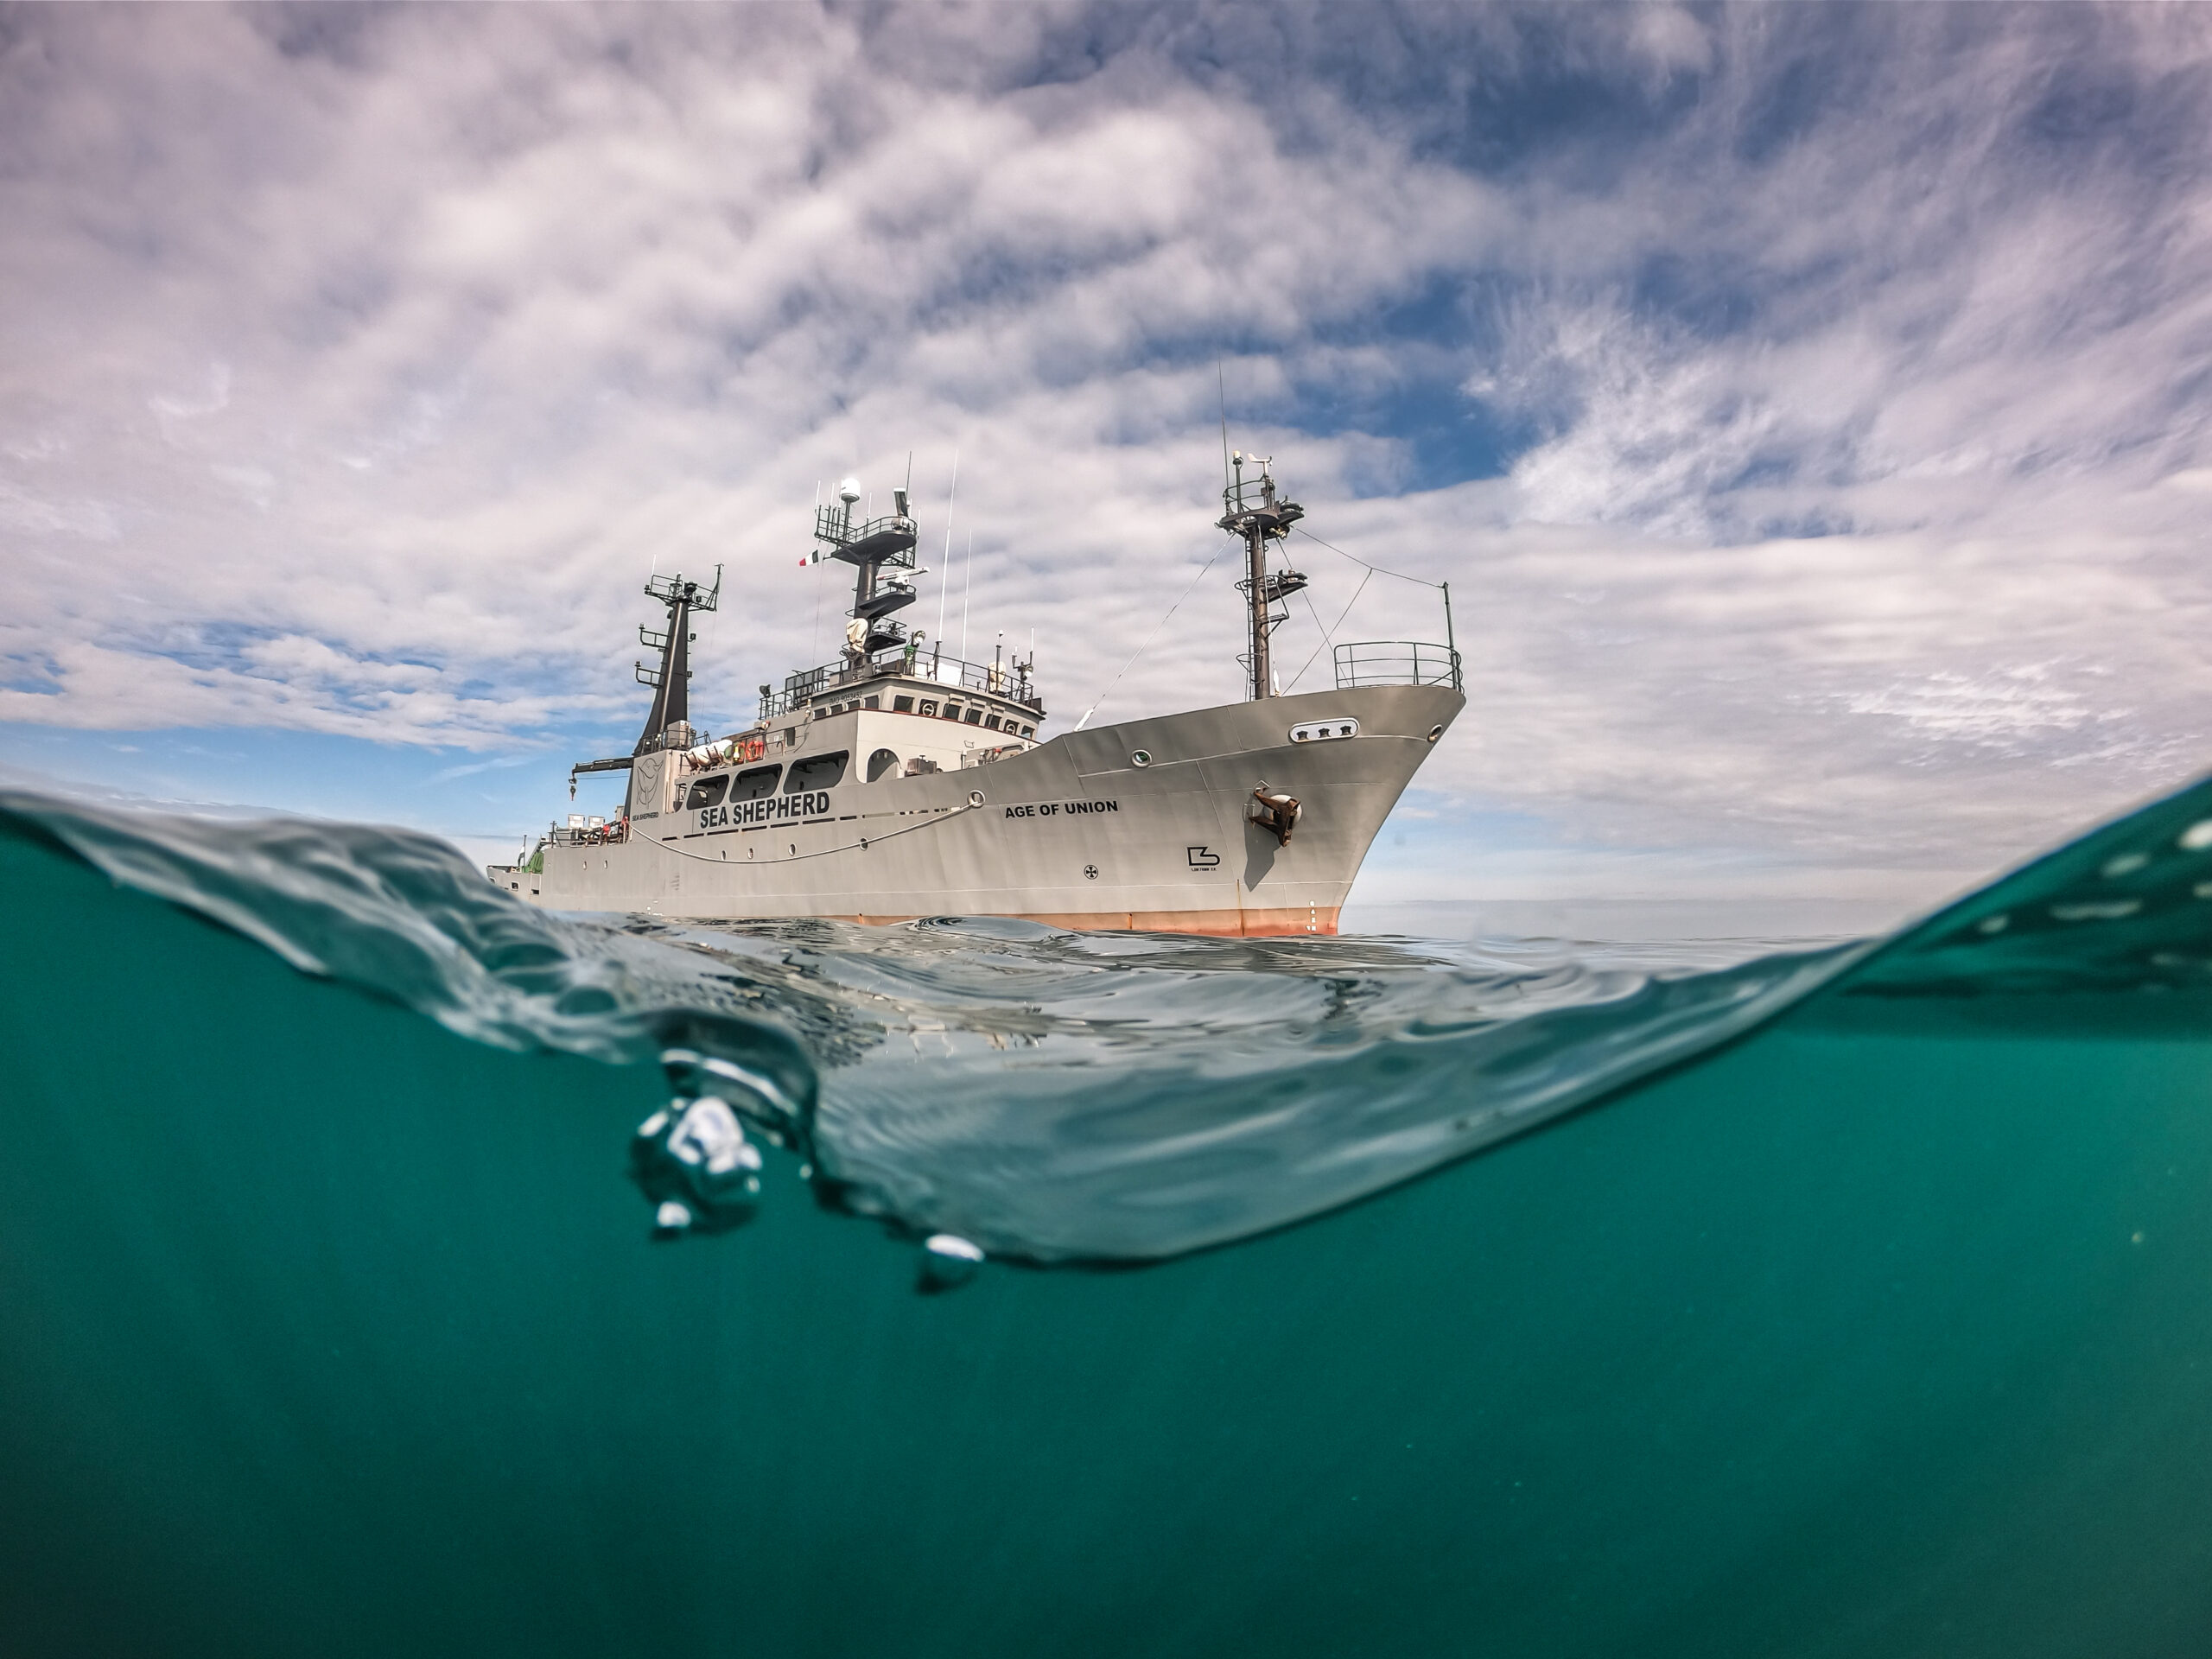 Sea Shepherd, privateers of the 21st century